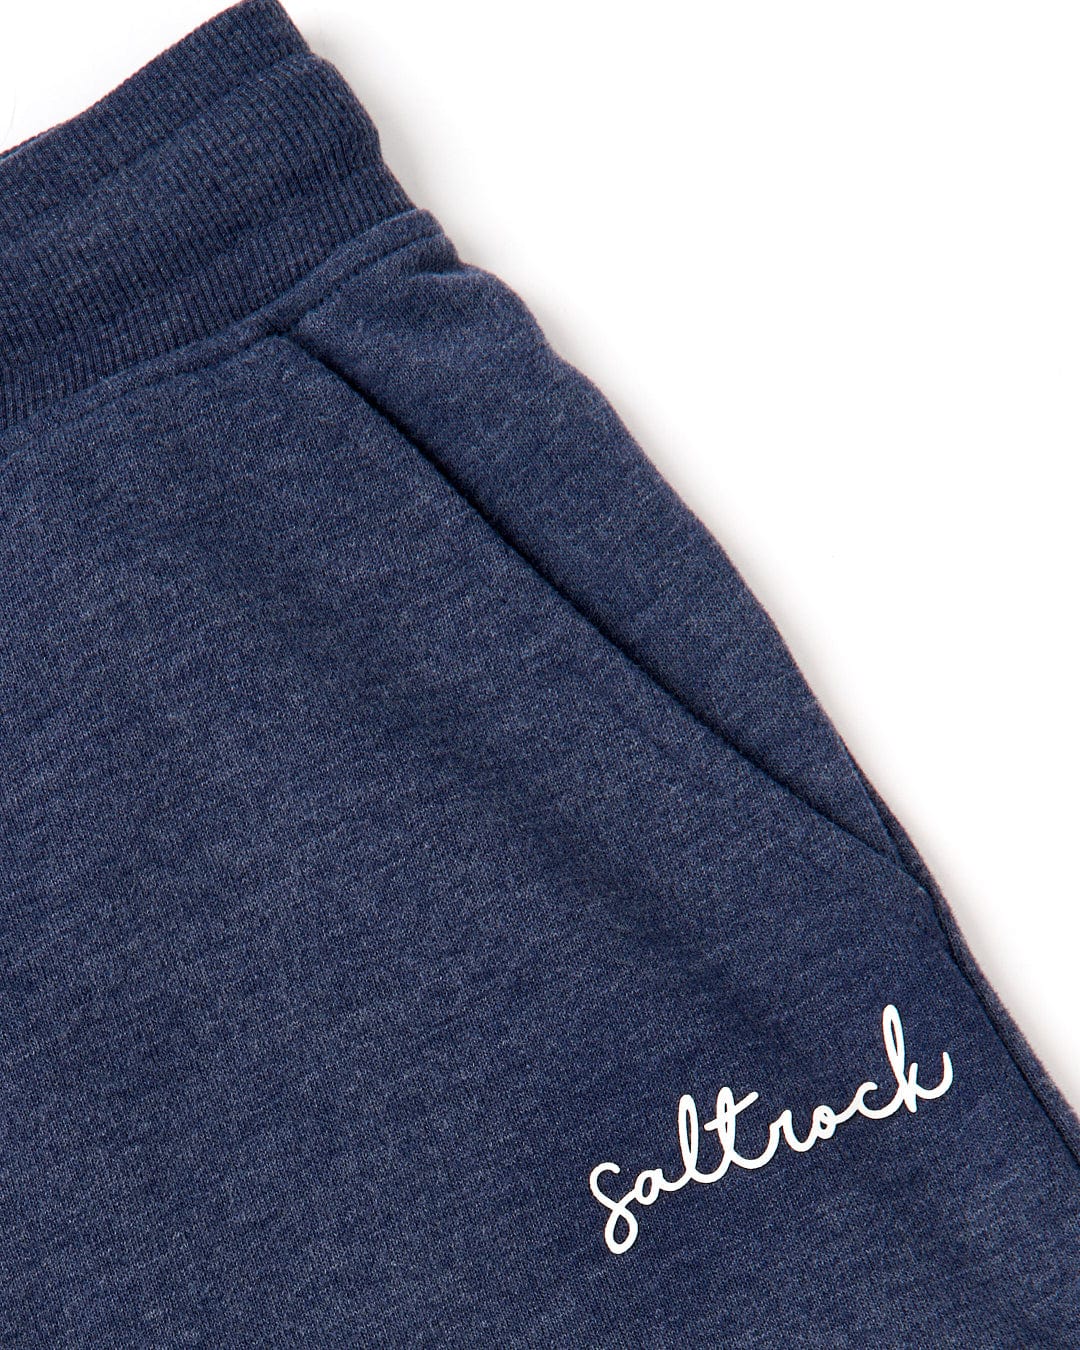 A Velator - Womens Sweat Short - Blue Marl with Saltrock branding.